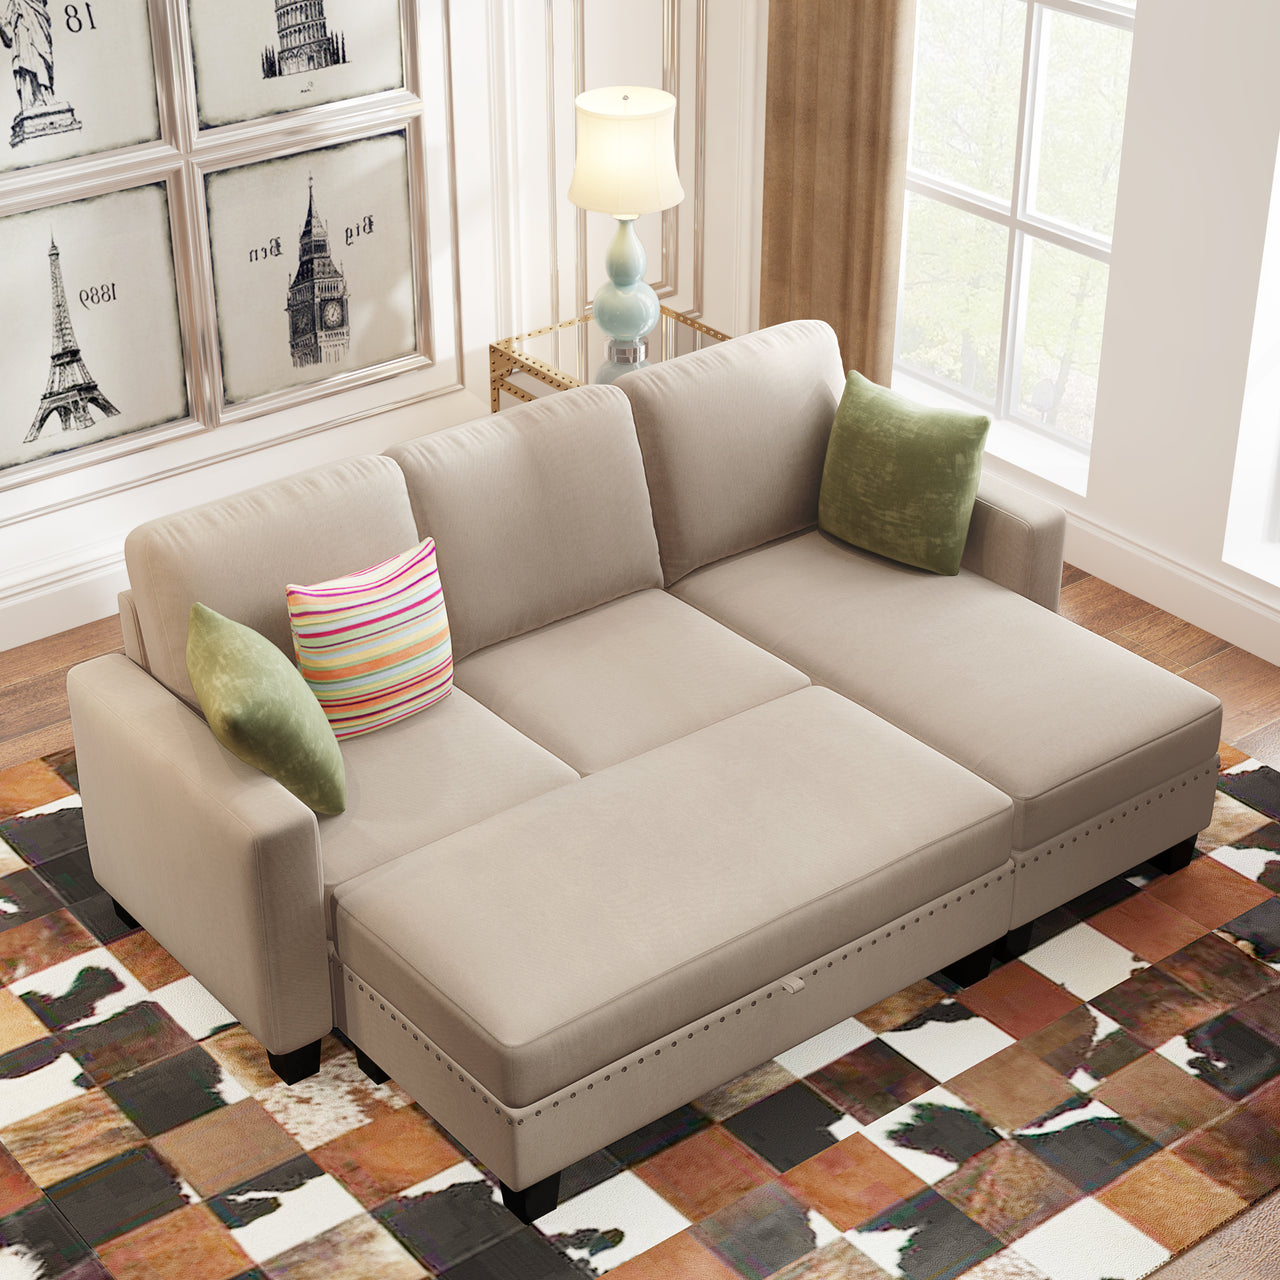 [New]81& Nailheaded Textured Fabric 3 pieces,Sofa,Square Ottoman,Rectangle Storage Ottoman,Warm Grey